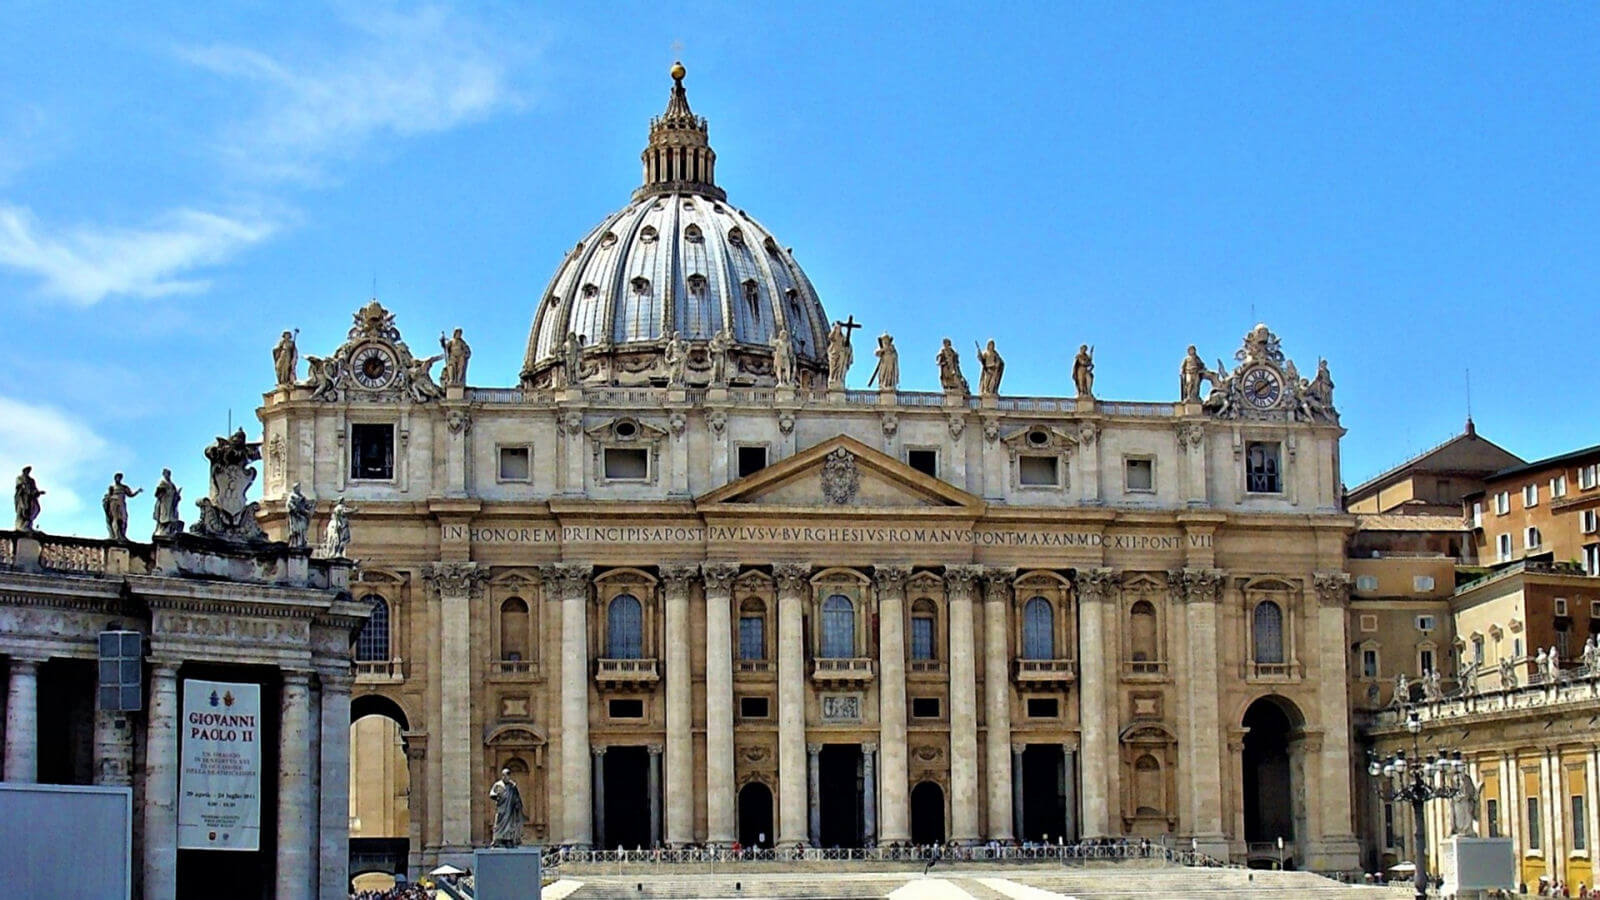 St Peter's Basilica in Vatican City